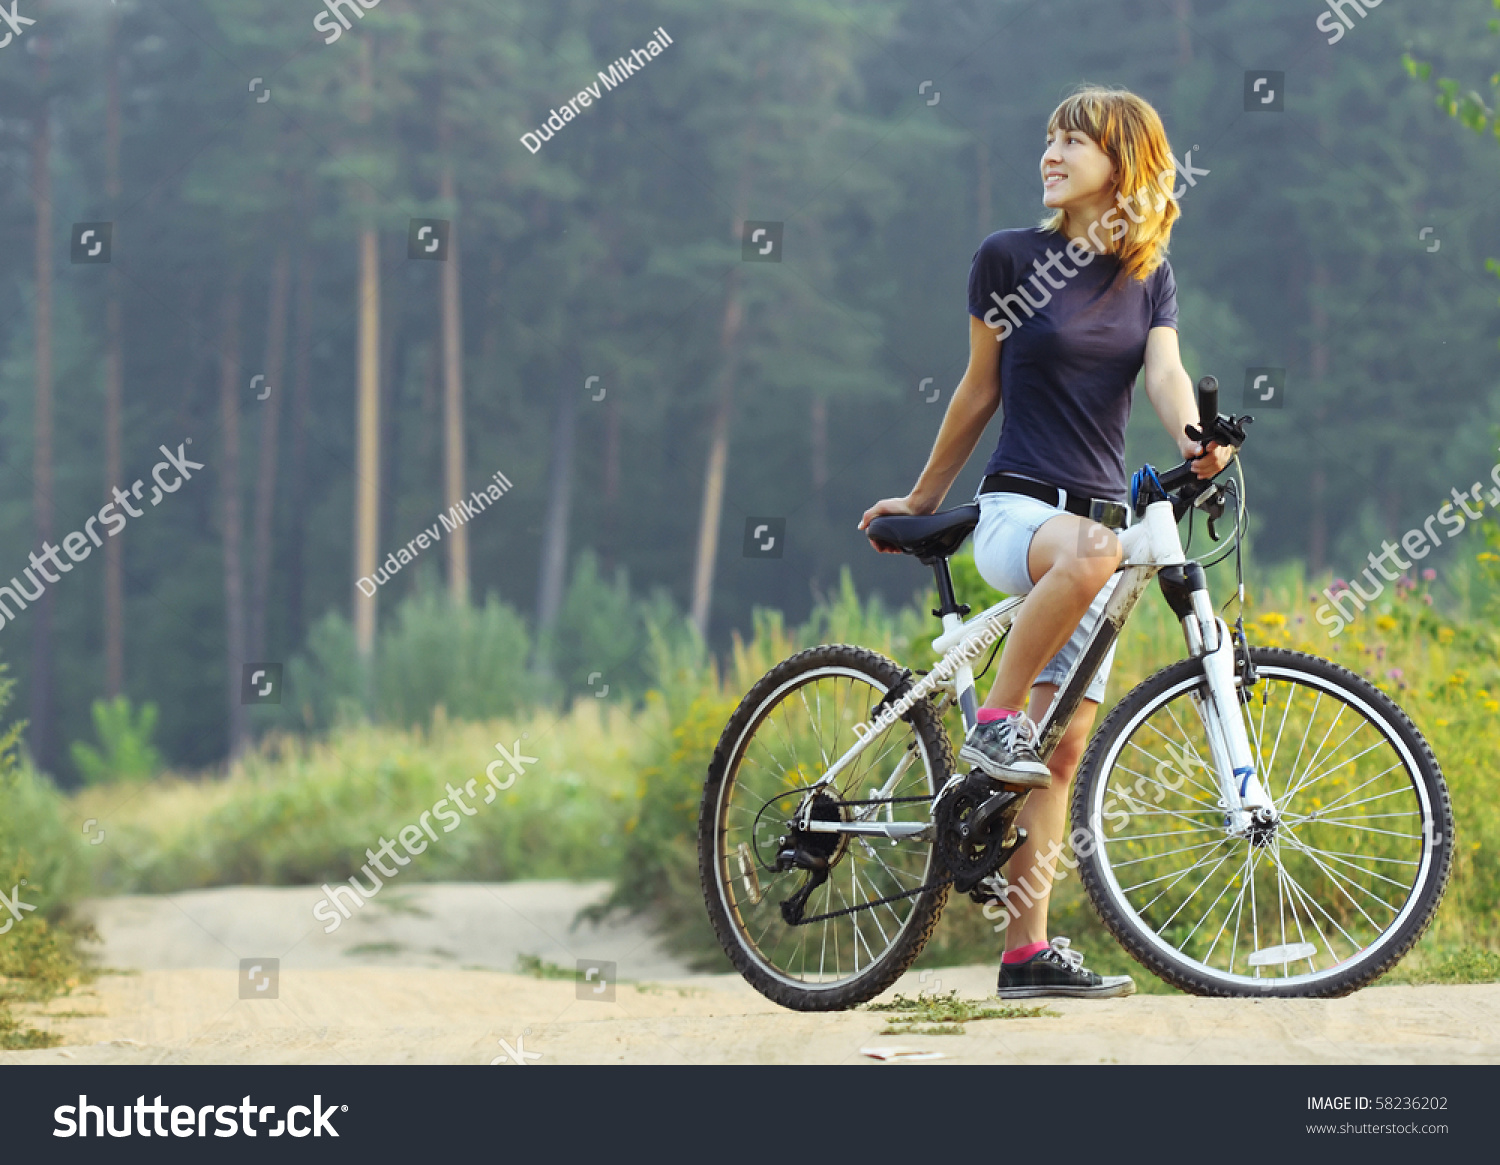 bike standing photos